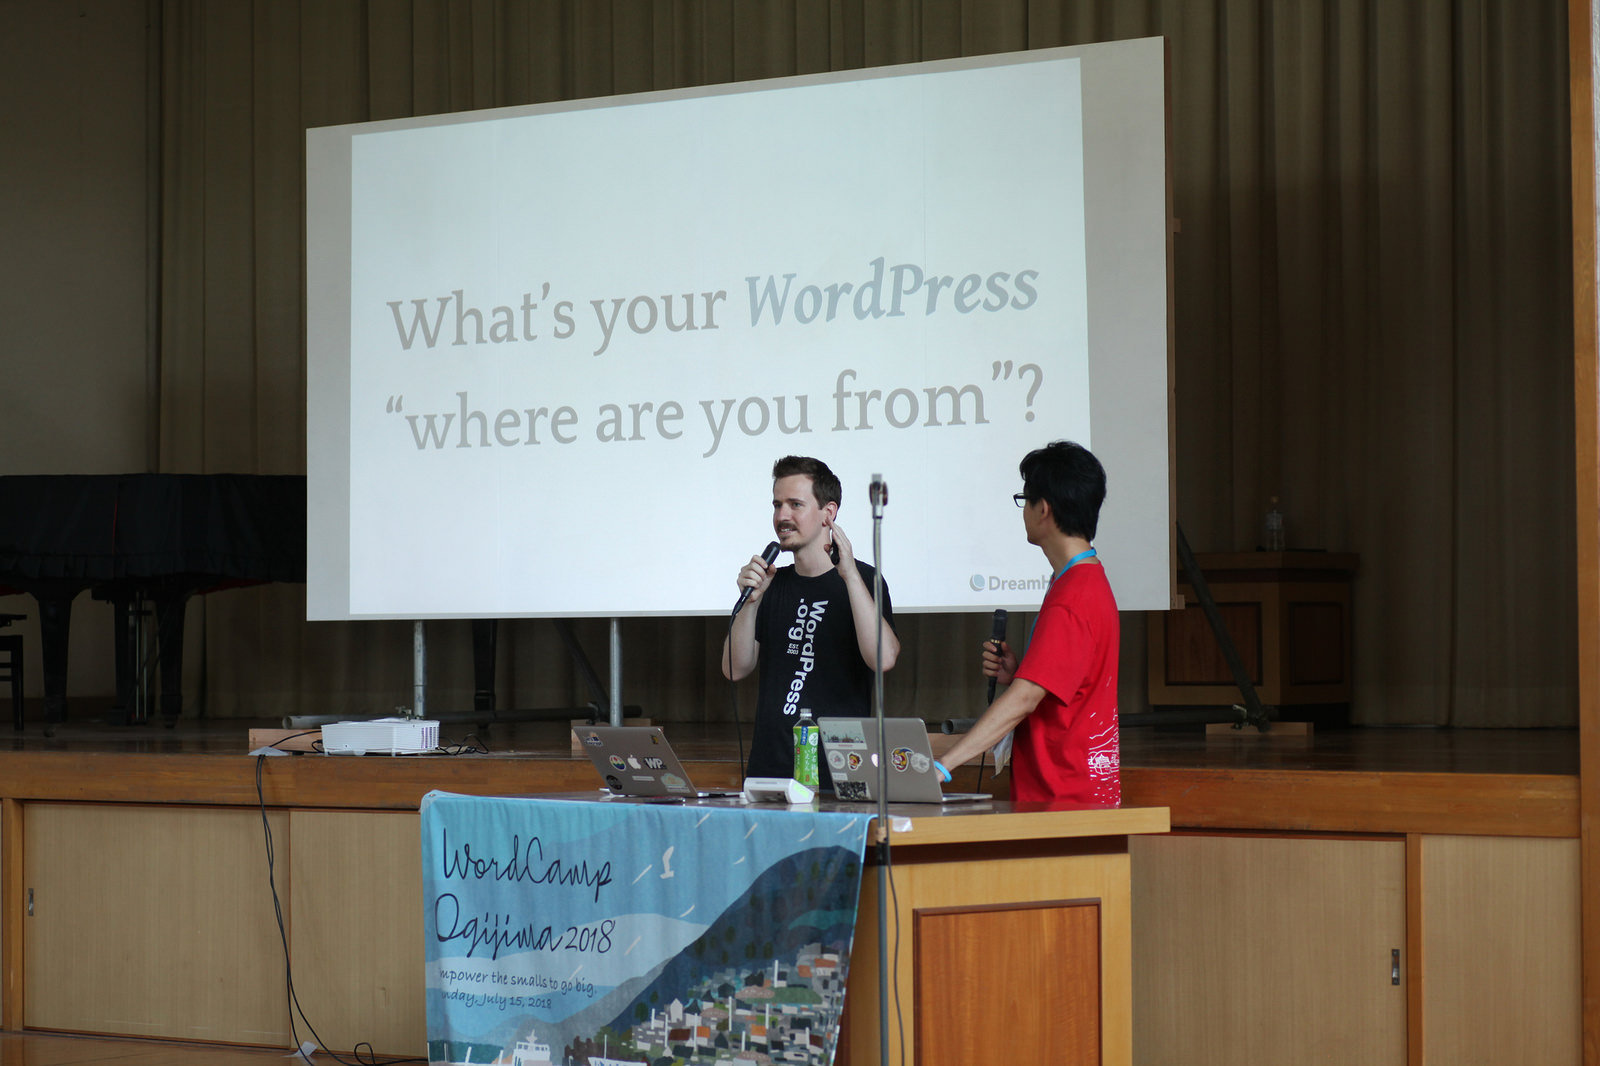 What's your WordPress "where are you from?" と映し出されたスクリーンの前で話をするアメリカ人男性と通訳の西川。